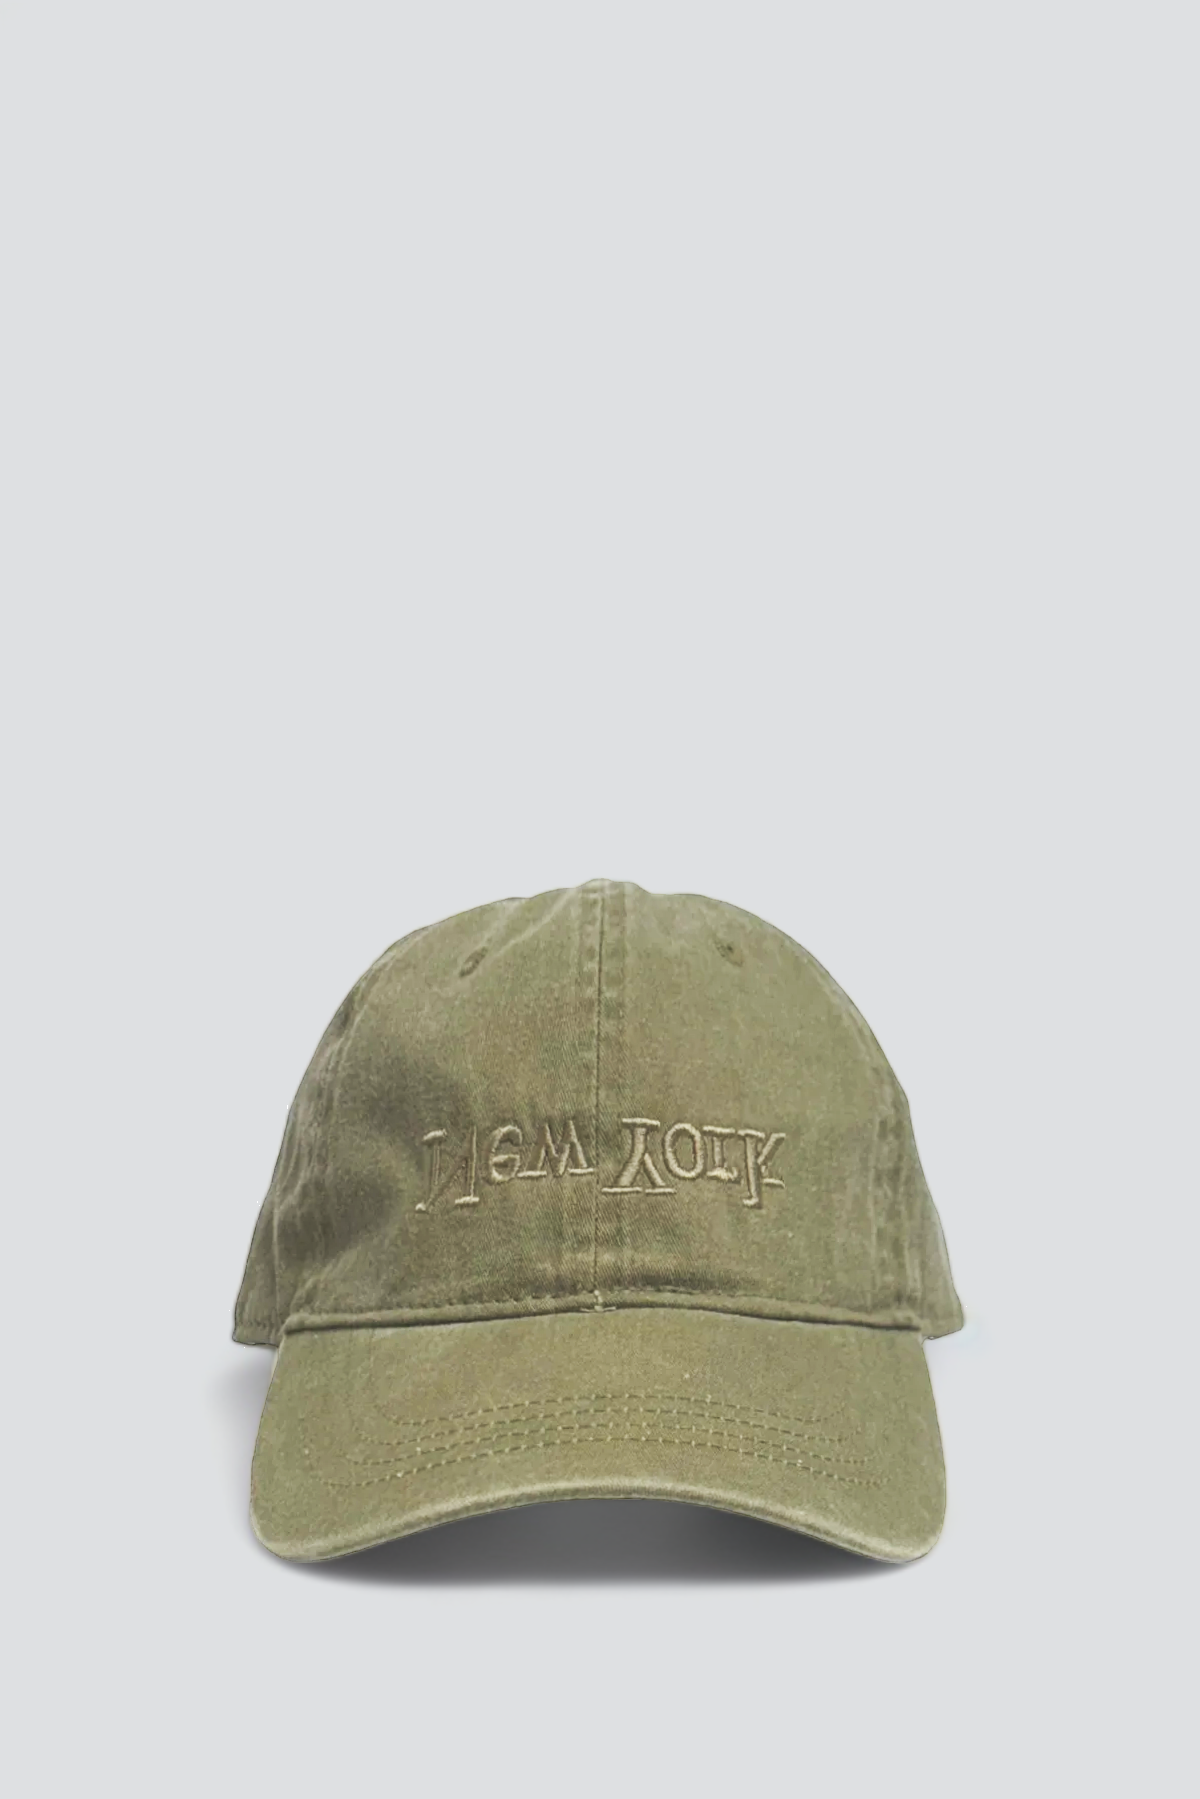 New York Embroidered Hat - Washed Khaki